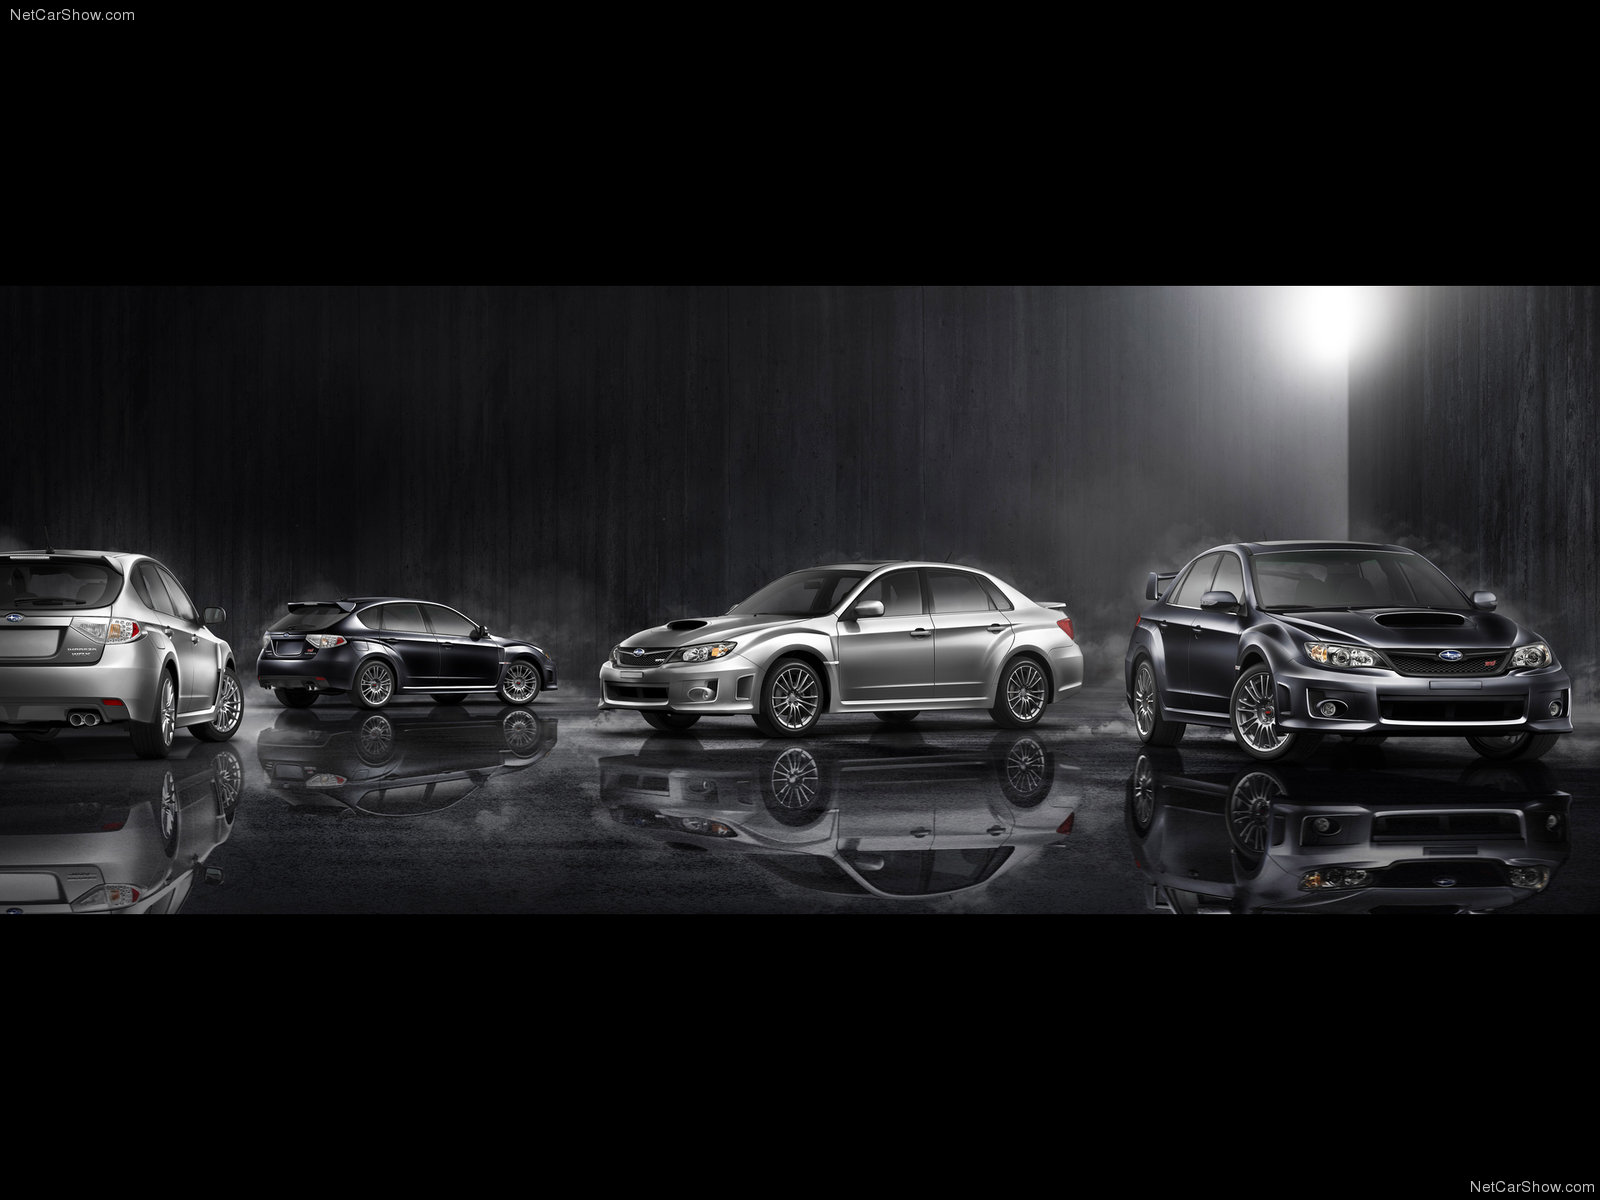  Subaru HQ Background Images